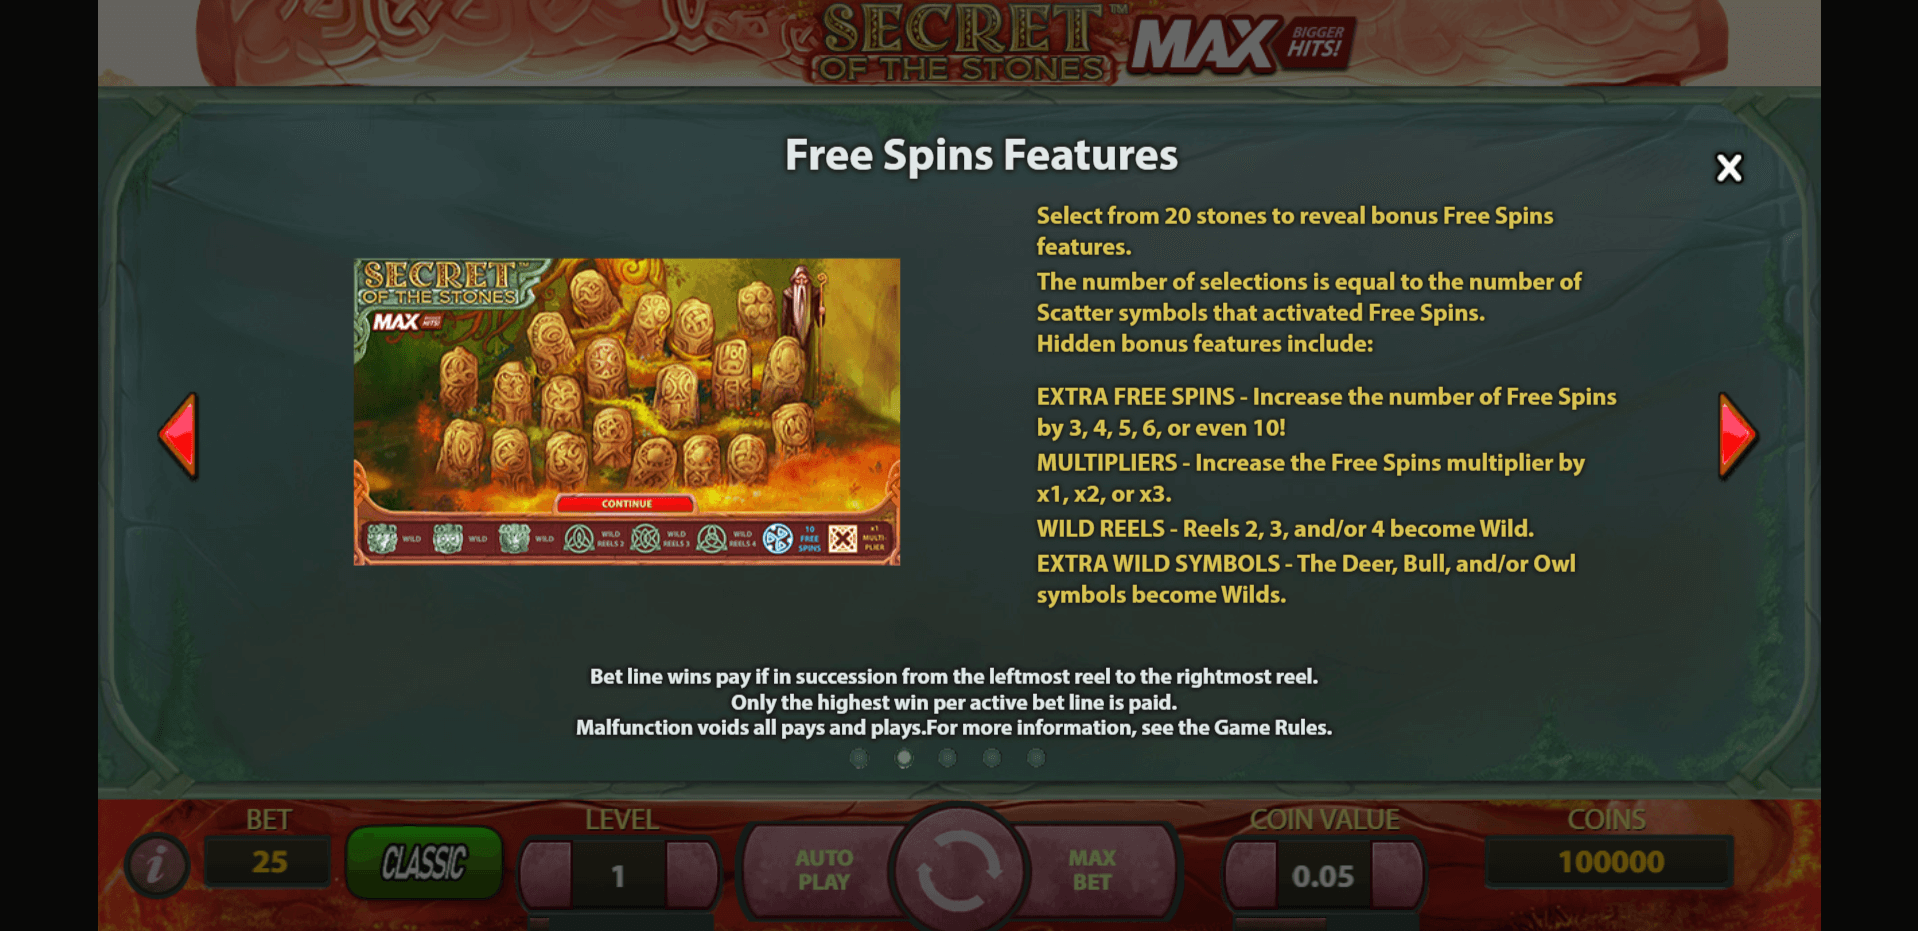 secret of the stones max slot machine detail image 1